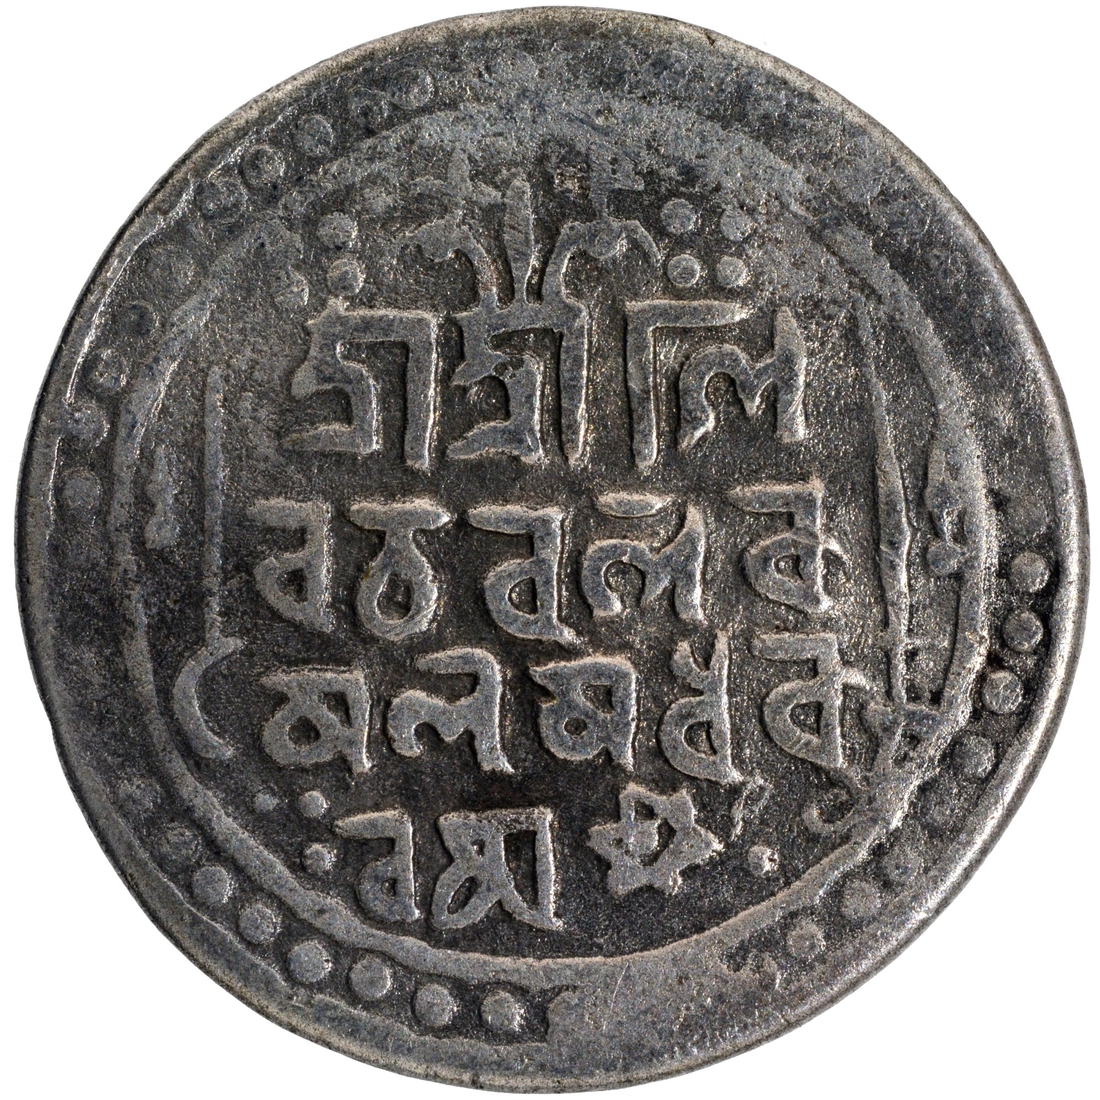 Silver Rupee Coin of Ram Simha II of Jaintiapur